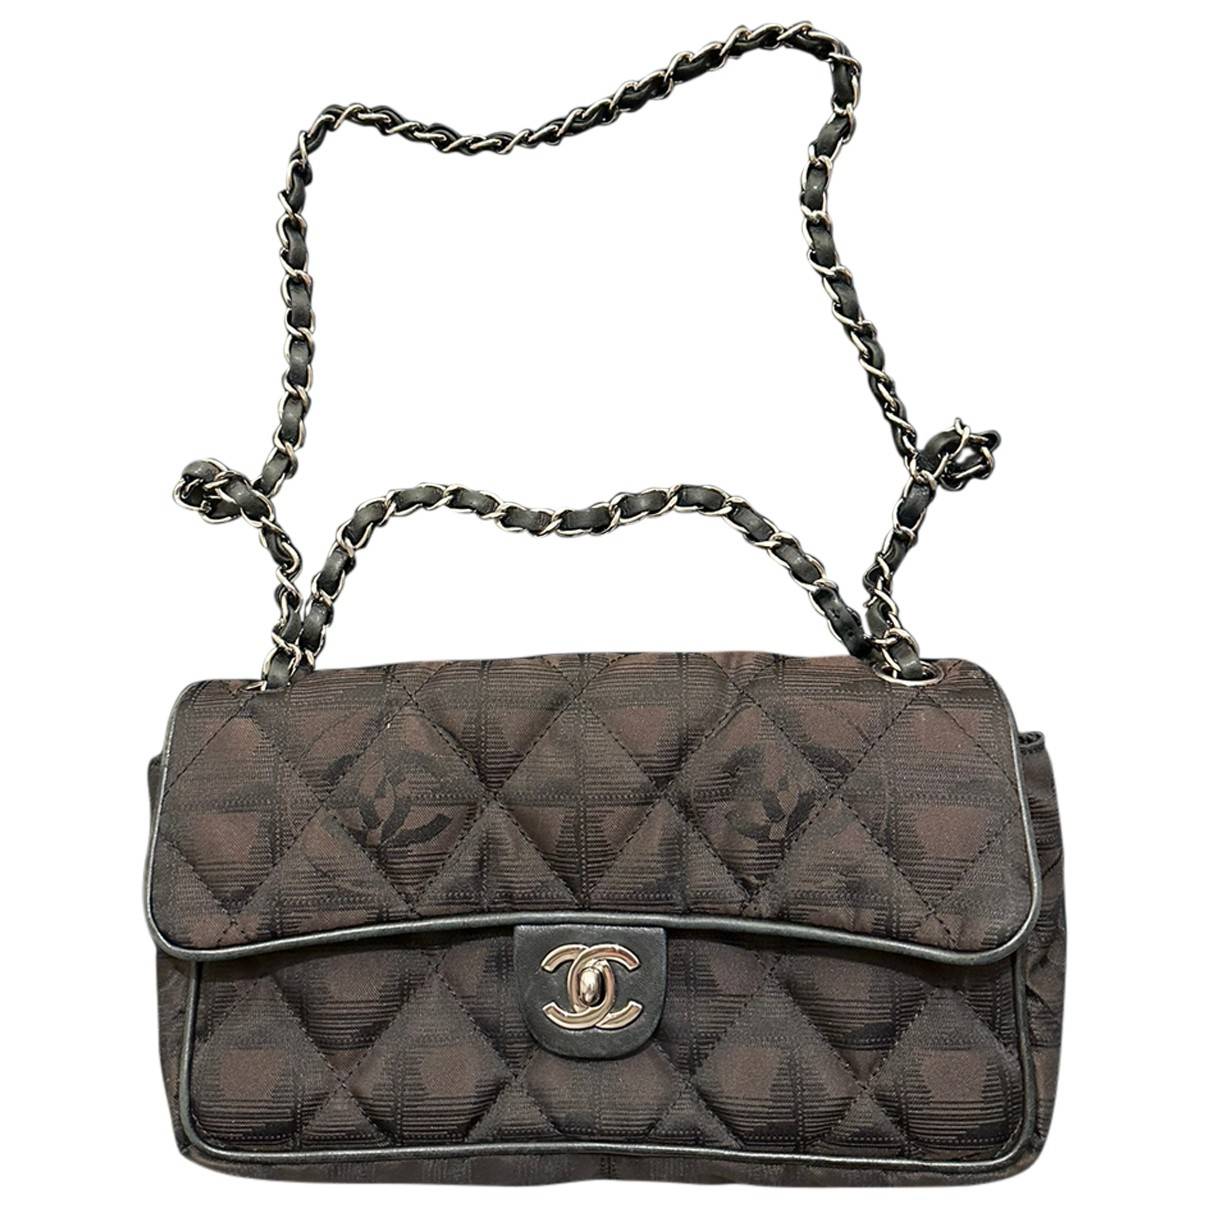 CHANEL Vintage Chanel Logo Cotton & leather Chain shoulder bag